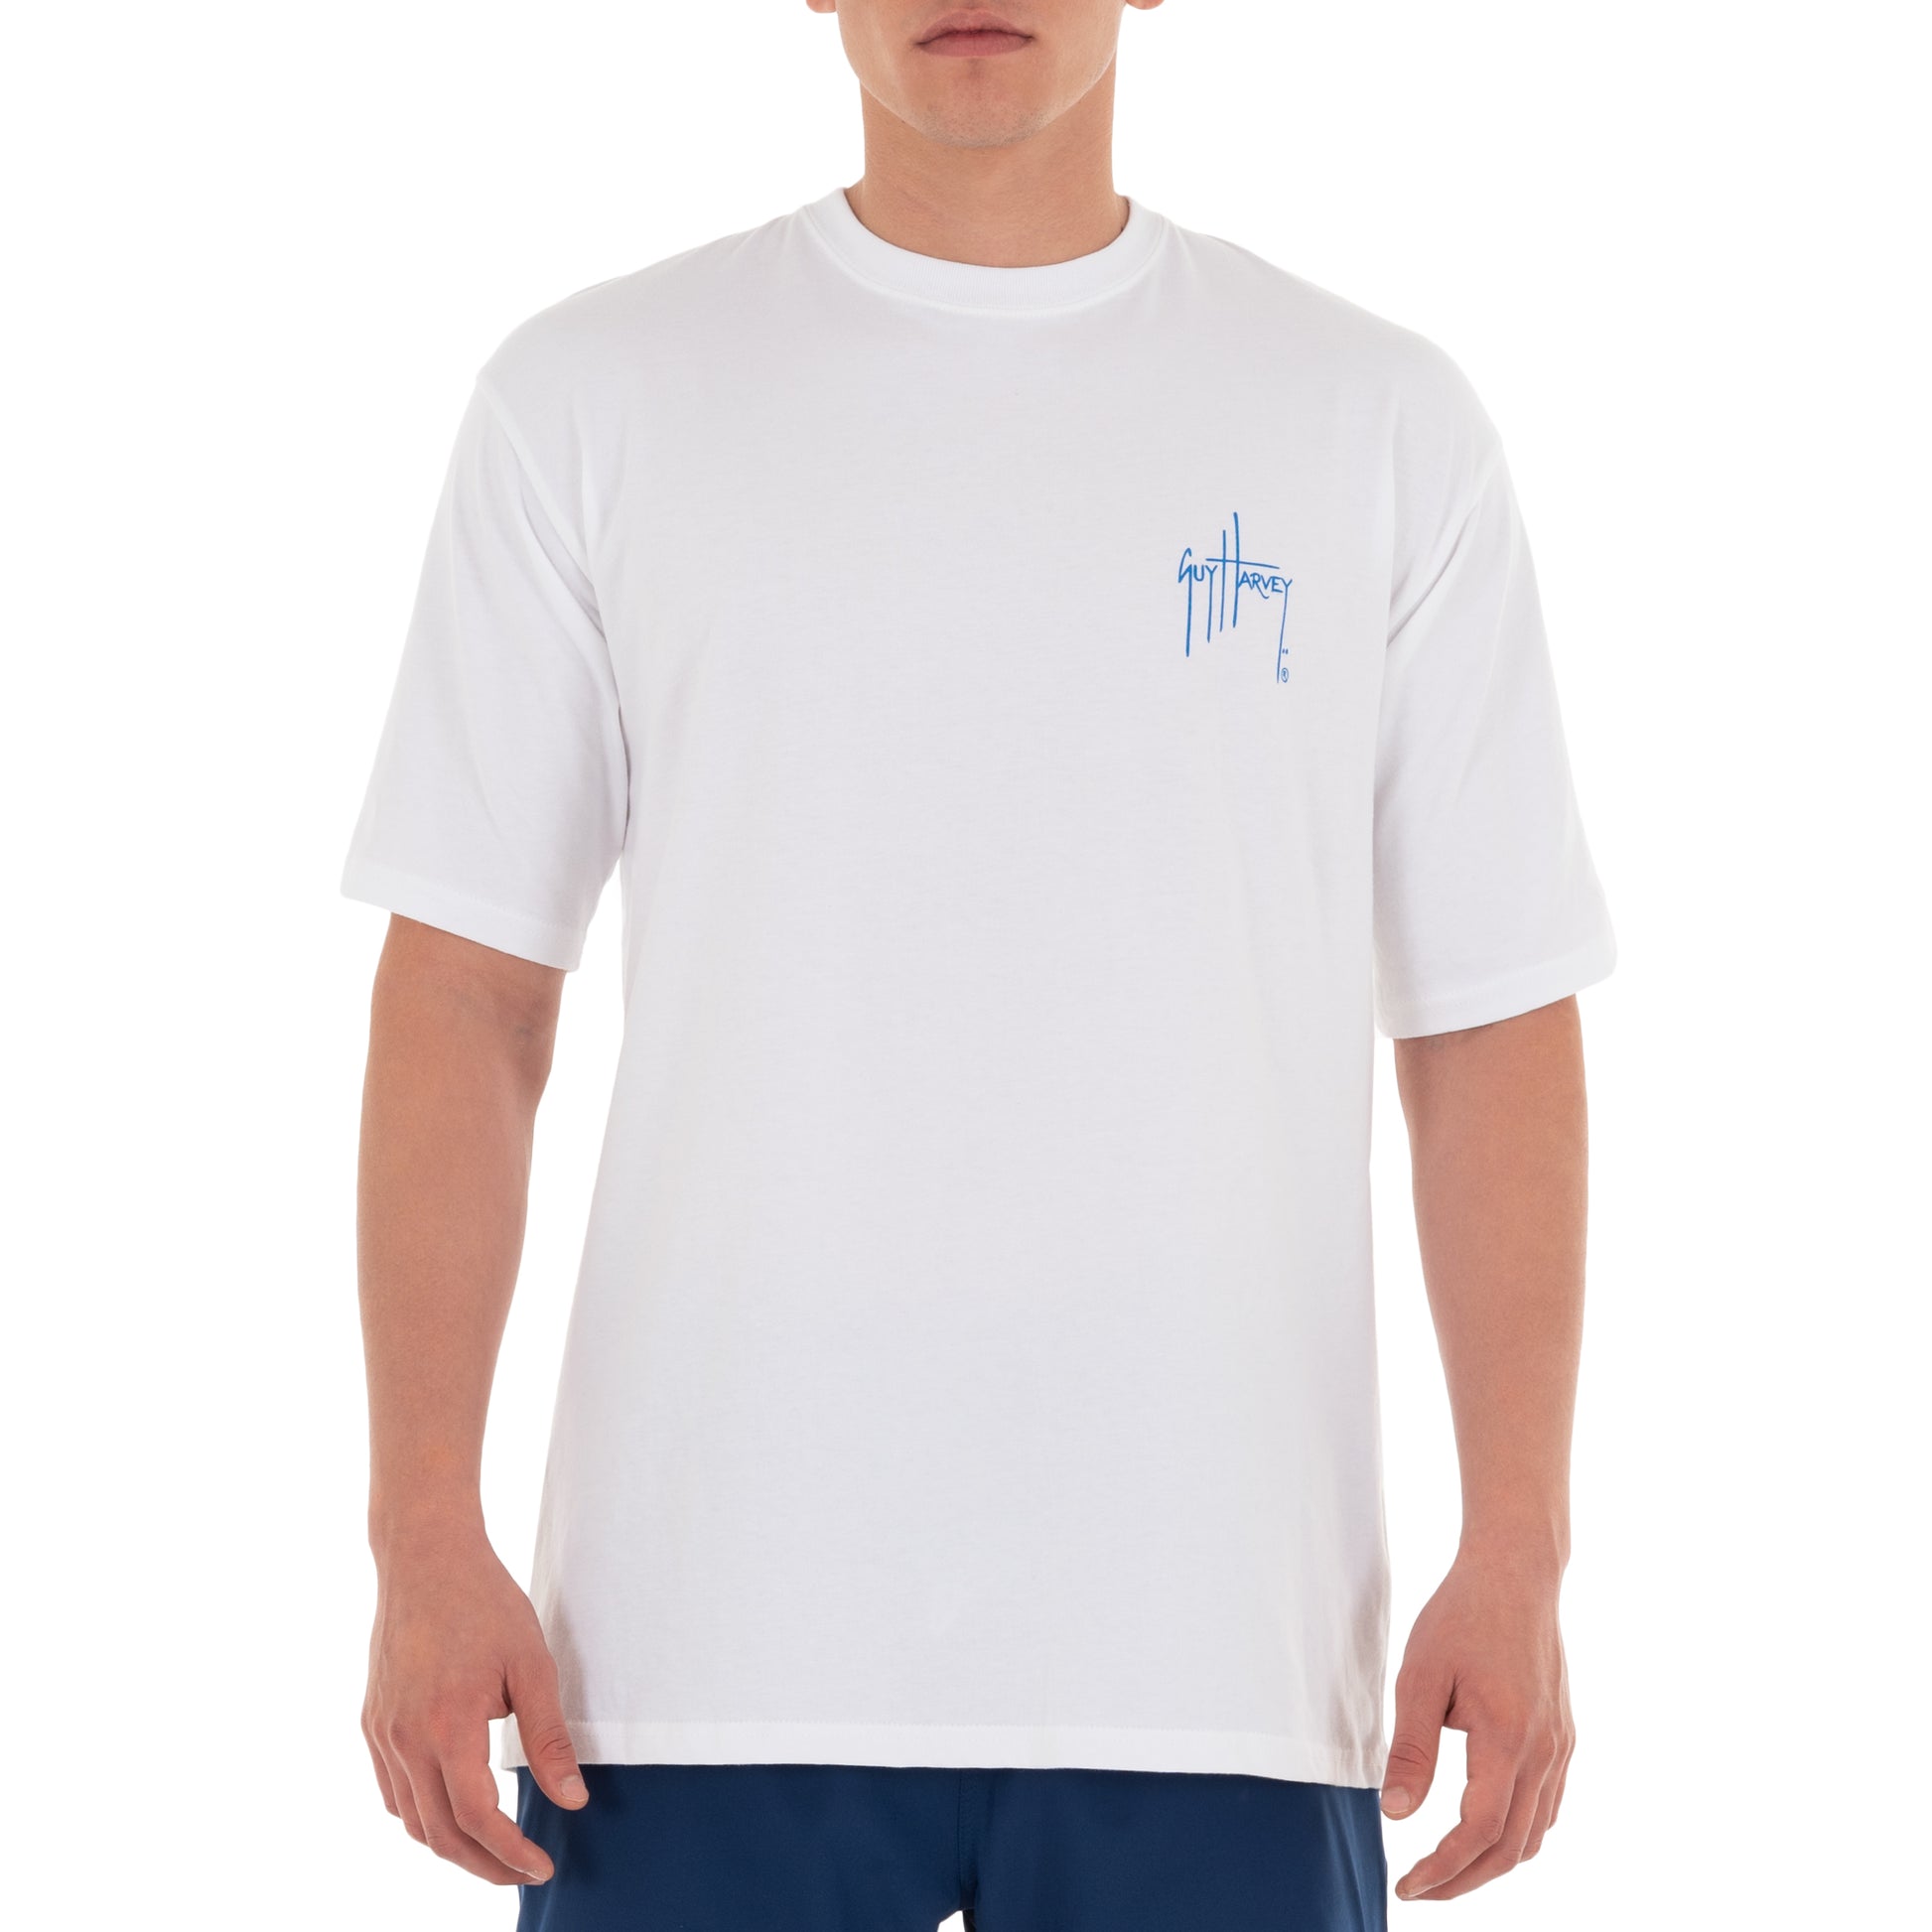 Men's Inshore Catch Trout Short Sleeve White T-Shirt View 2